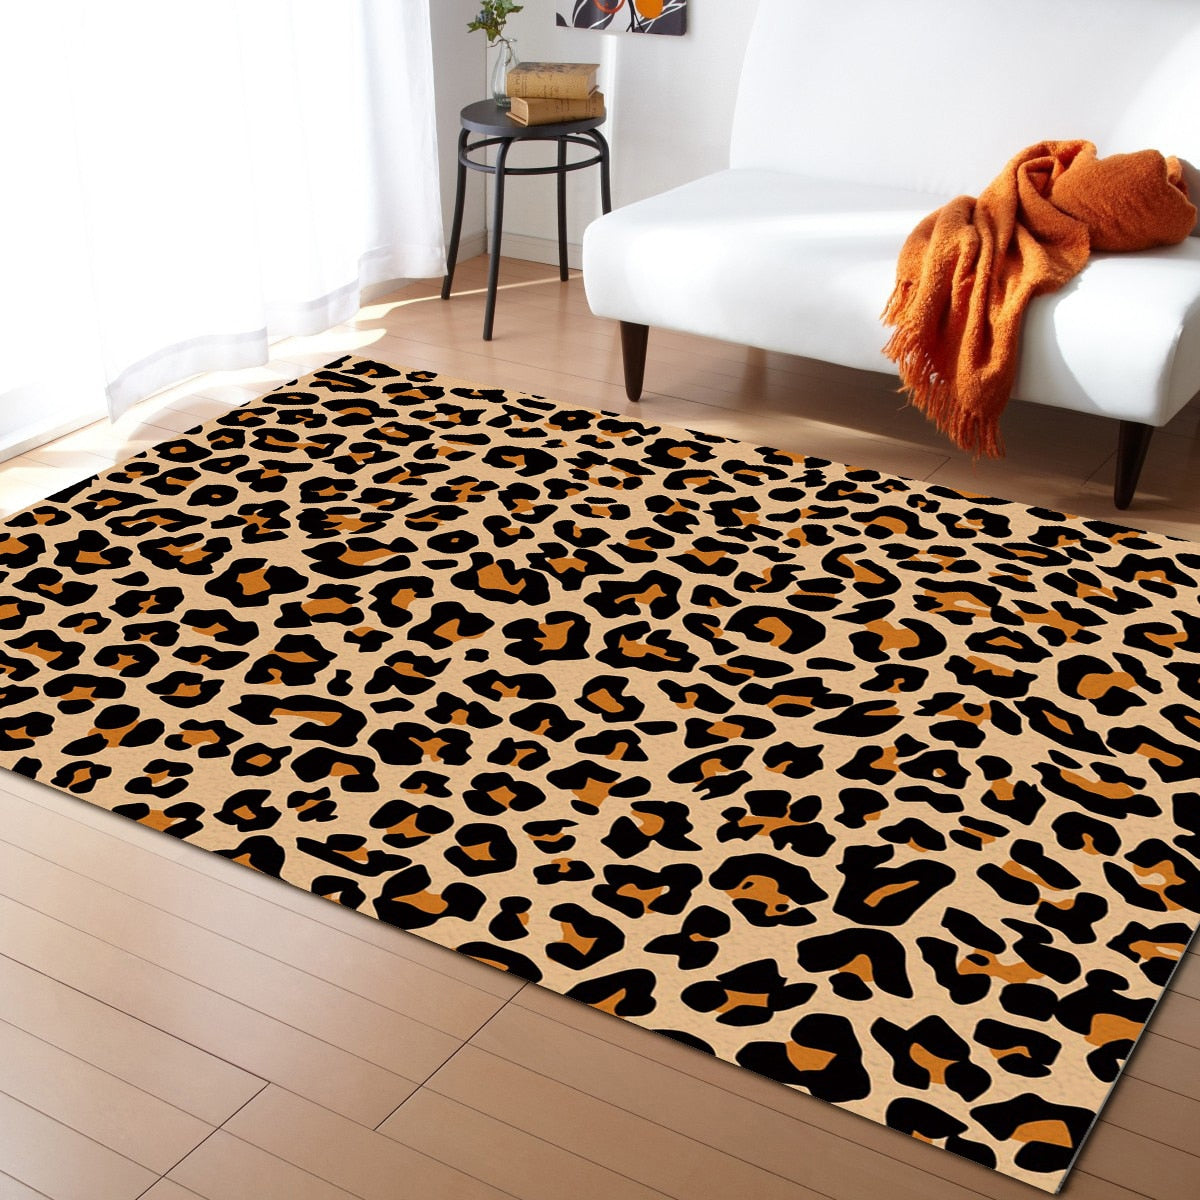 NOAHAS Fluffy Leopard Print Rug Cheetah Print Area Rugs Soft